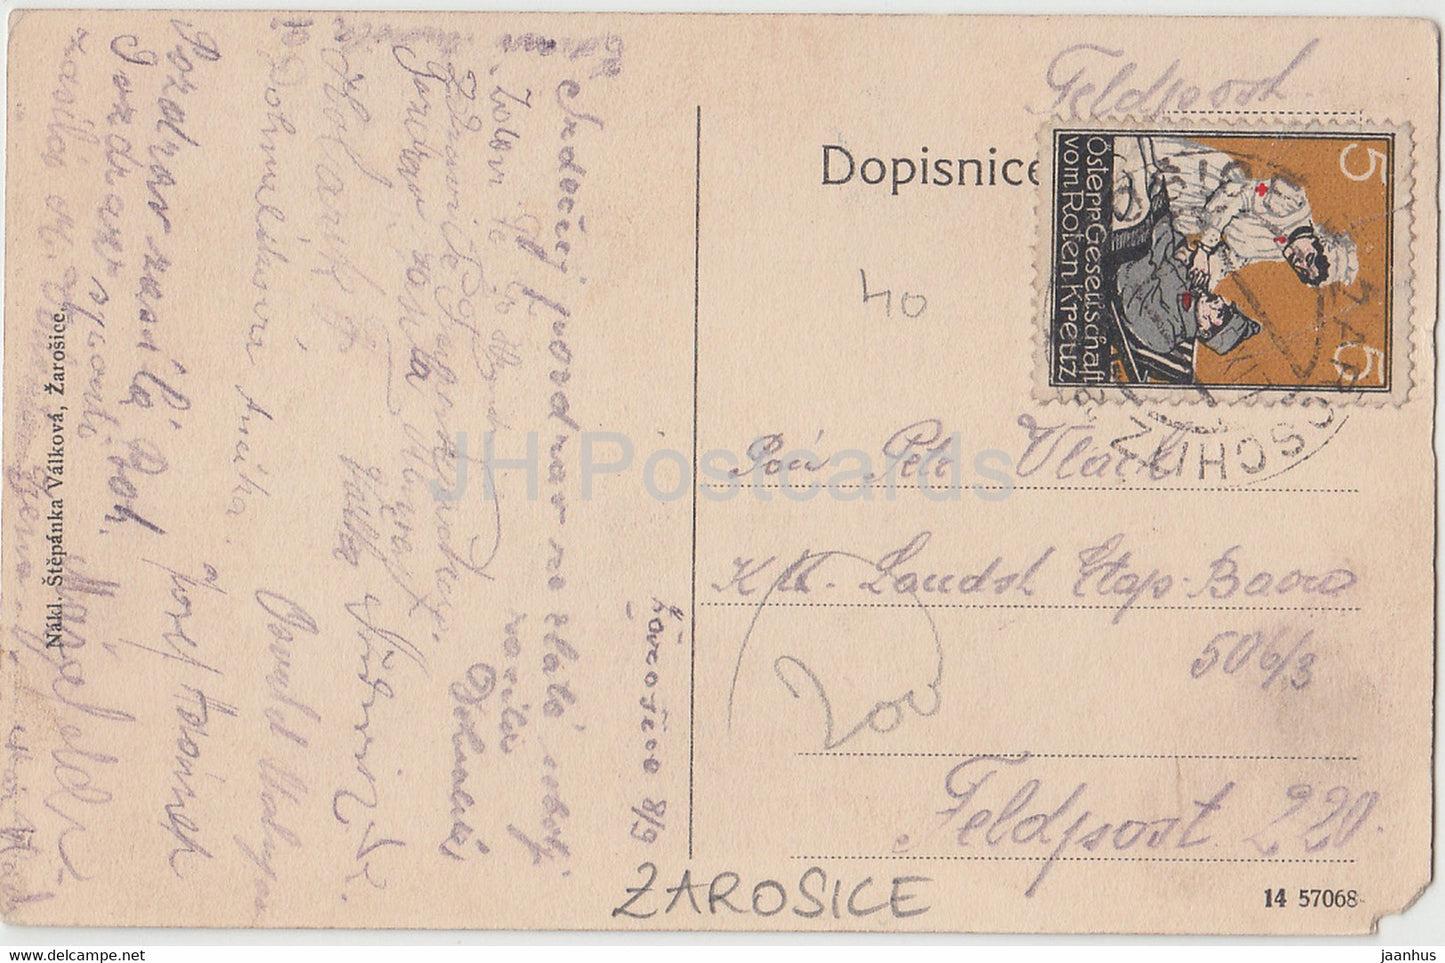 Pozdrav ze Zarosic - Zarosice - Feldpost - alte Postkarte - Tschechien - gebraucht